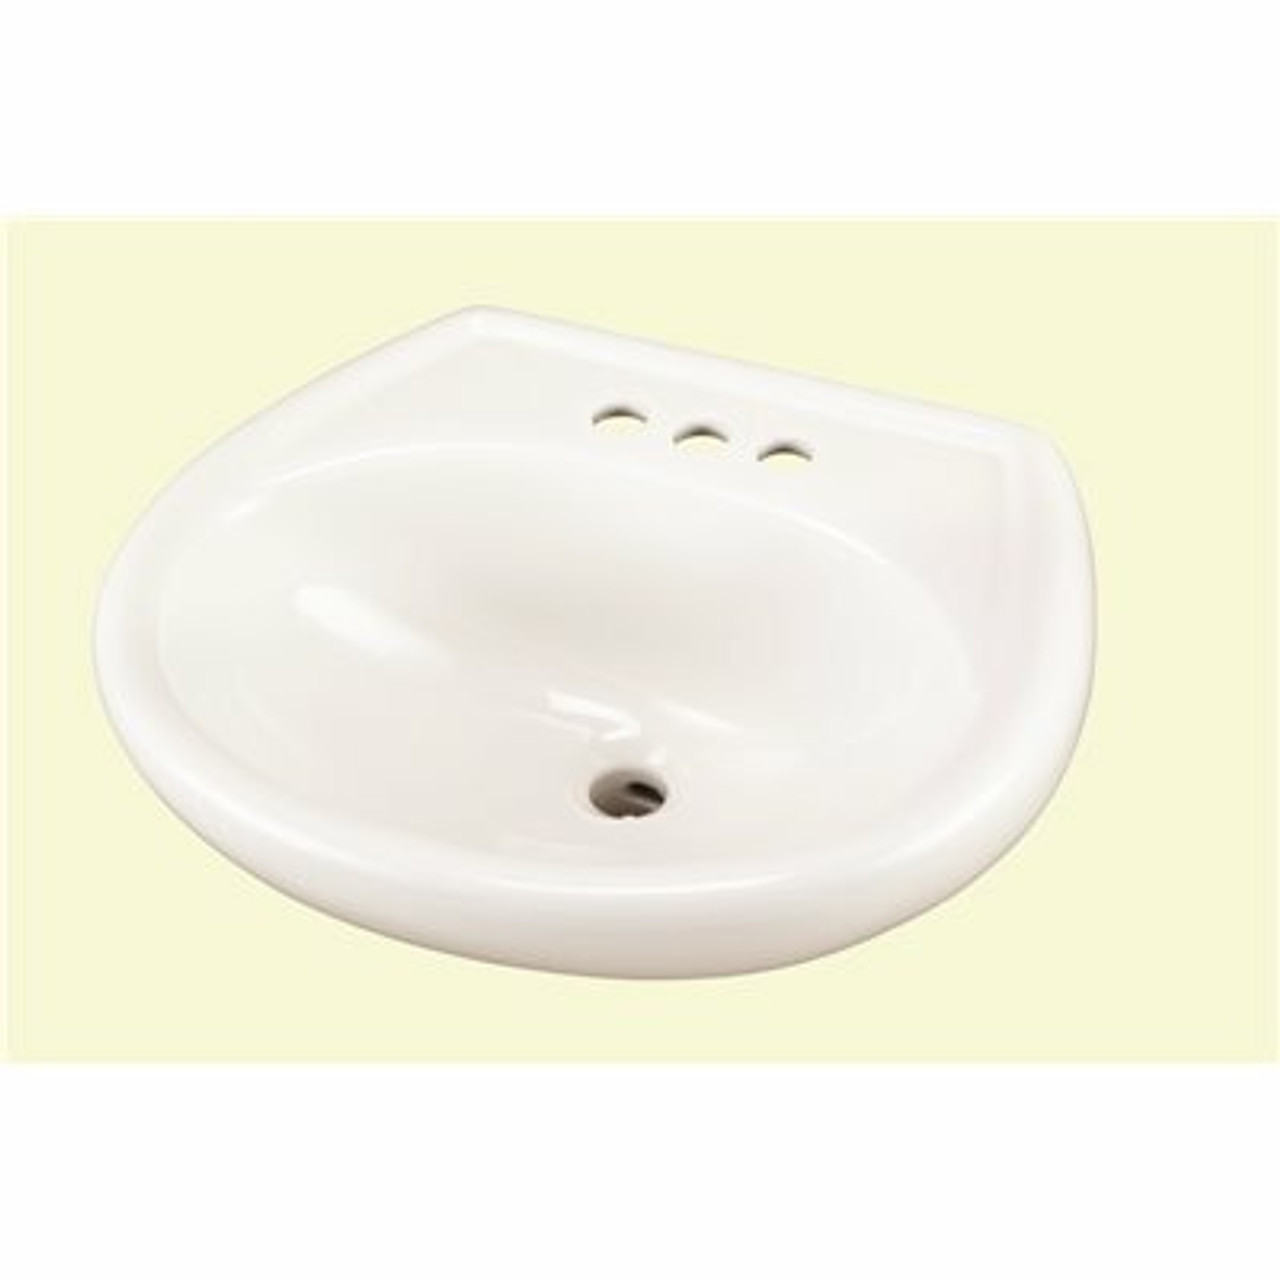 Gerber 20 In. X 18 In. Gerber Bathroom Pedestal Sink Bowl China In White